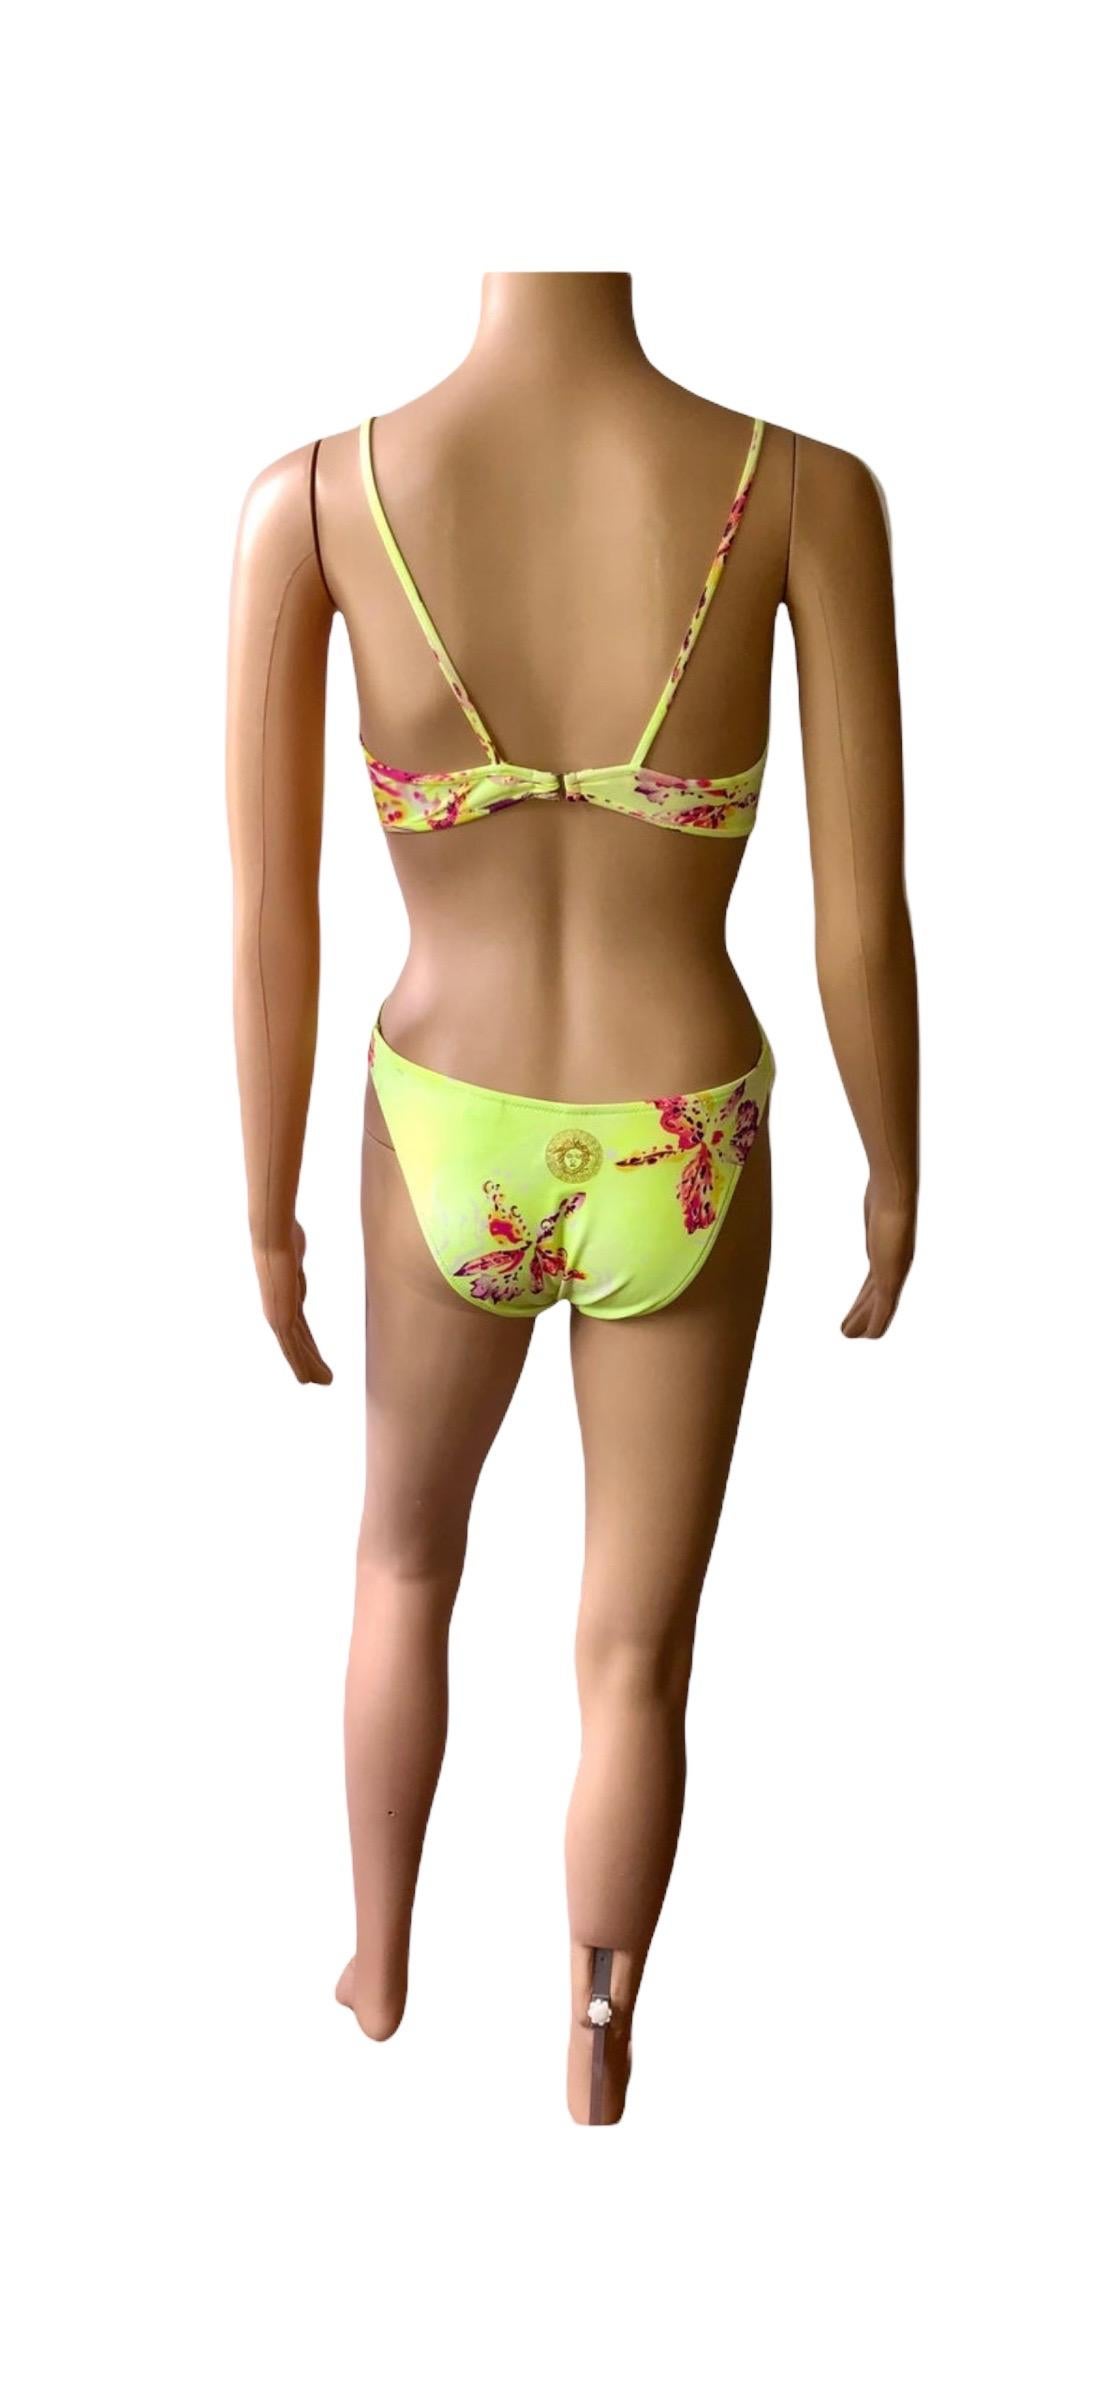 Gianni Versace S/S 2000 Orchid Neon Two-Piece Bikini Set Swimsuit Swimwear  For Sale 3